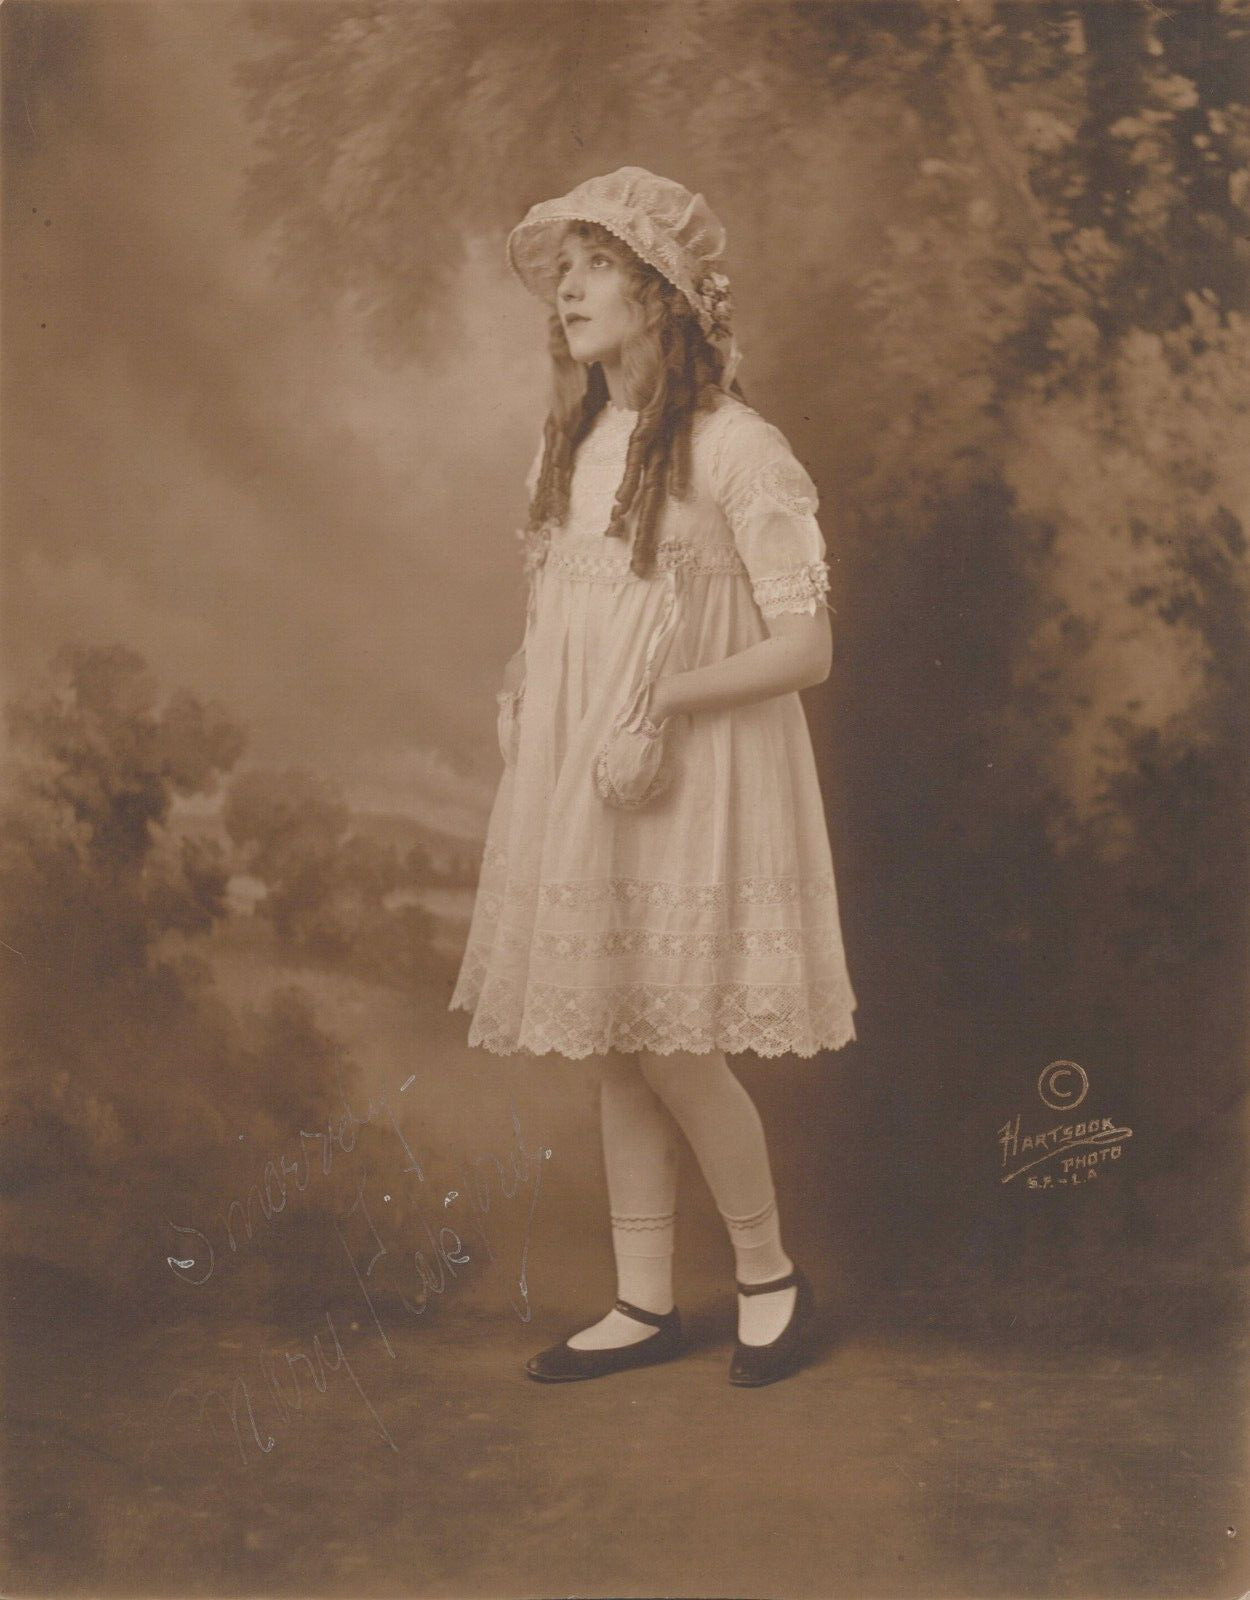 HOLLYWOOD BEAUTY MARY PICKFORD HARTSOOK STUNNING SIGNED PORTRAIT 1920s Photo C21